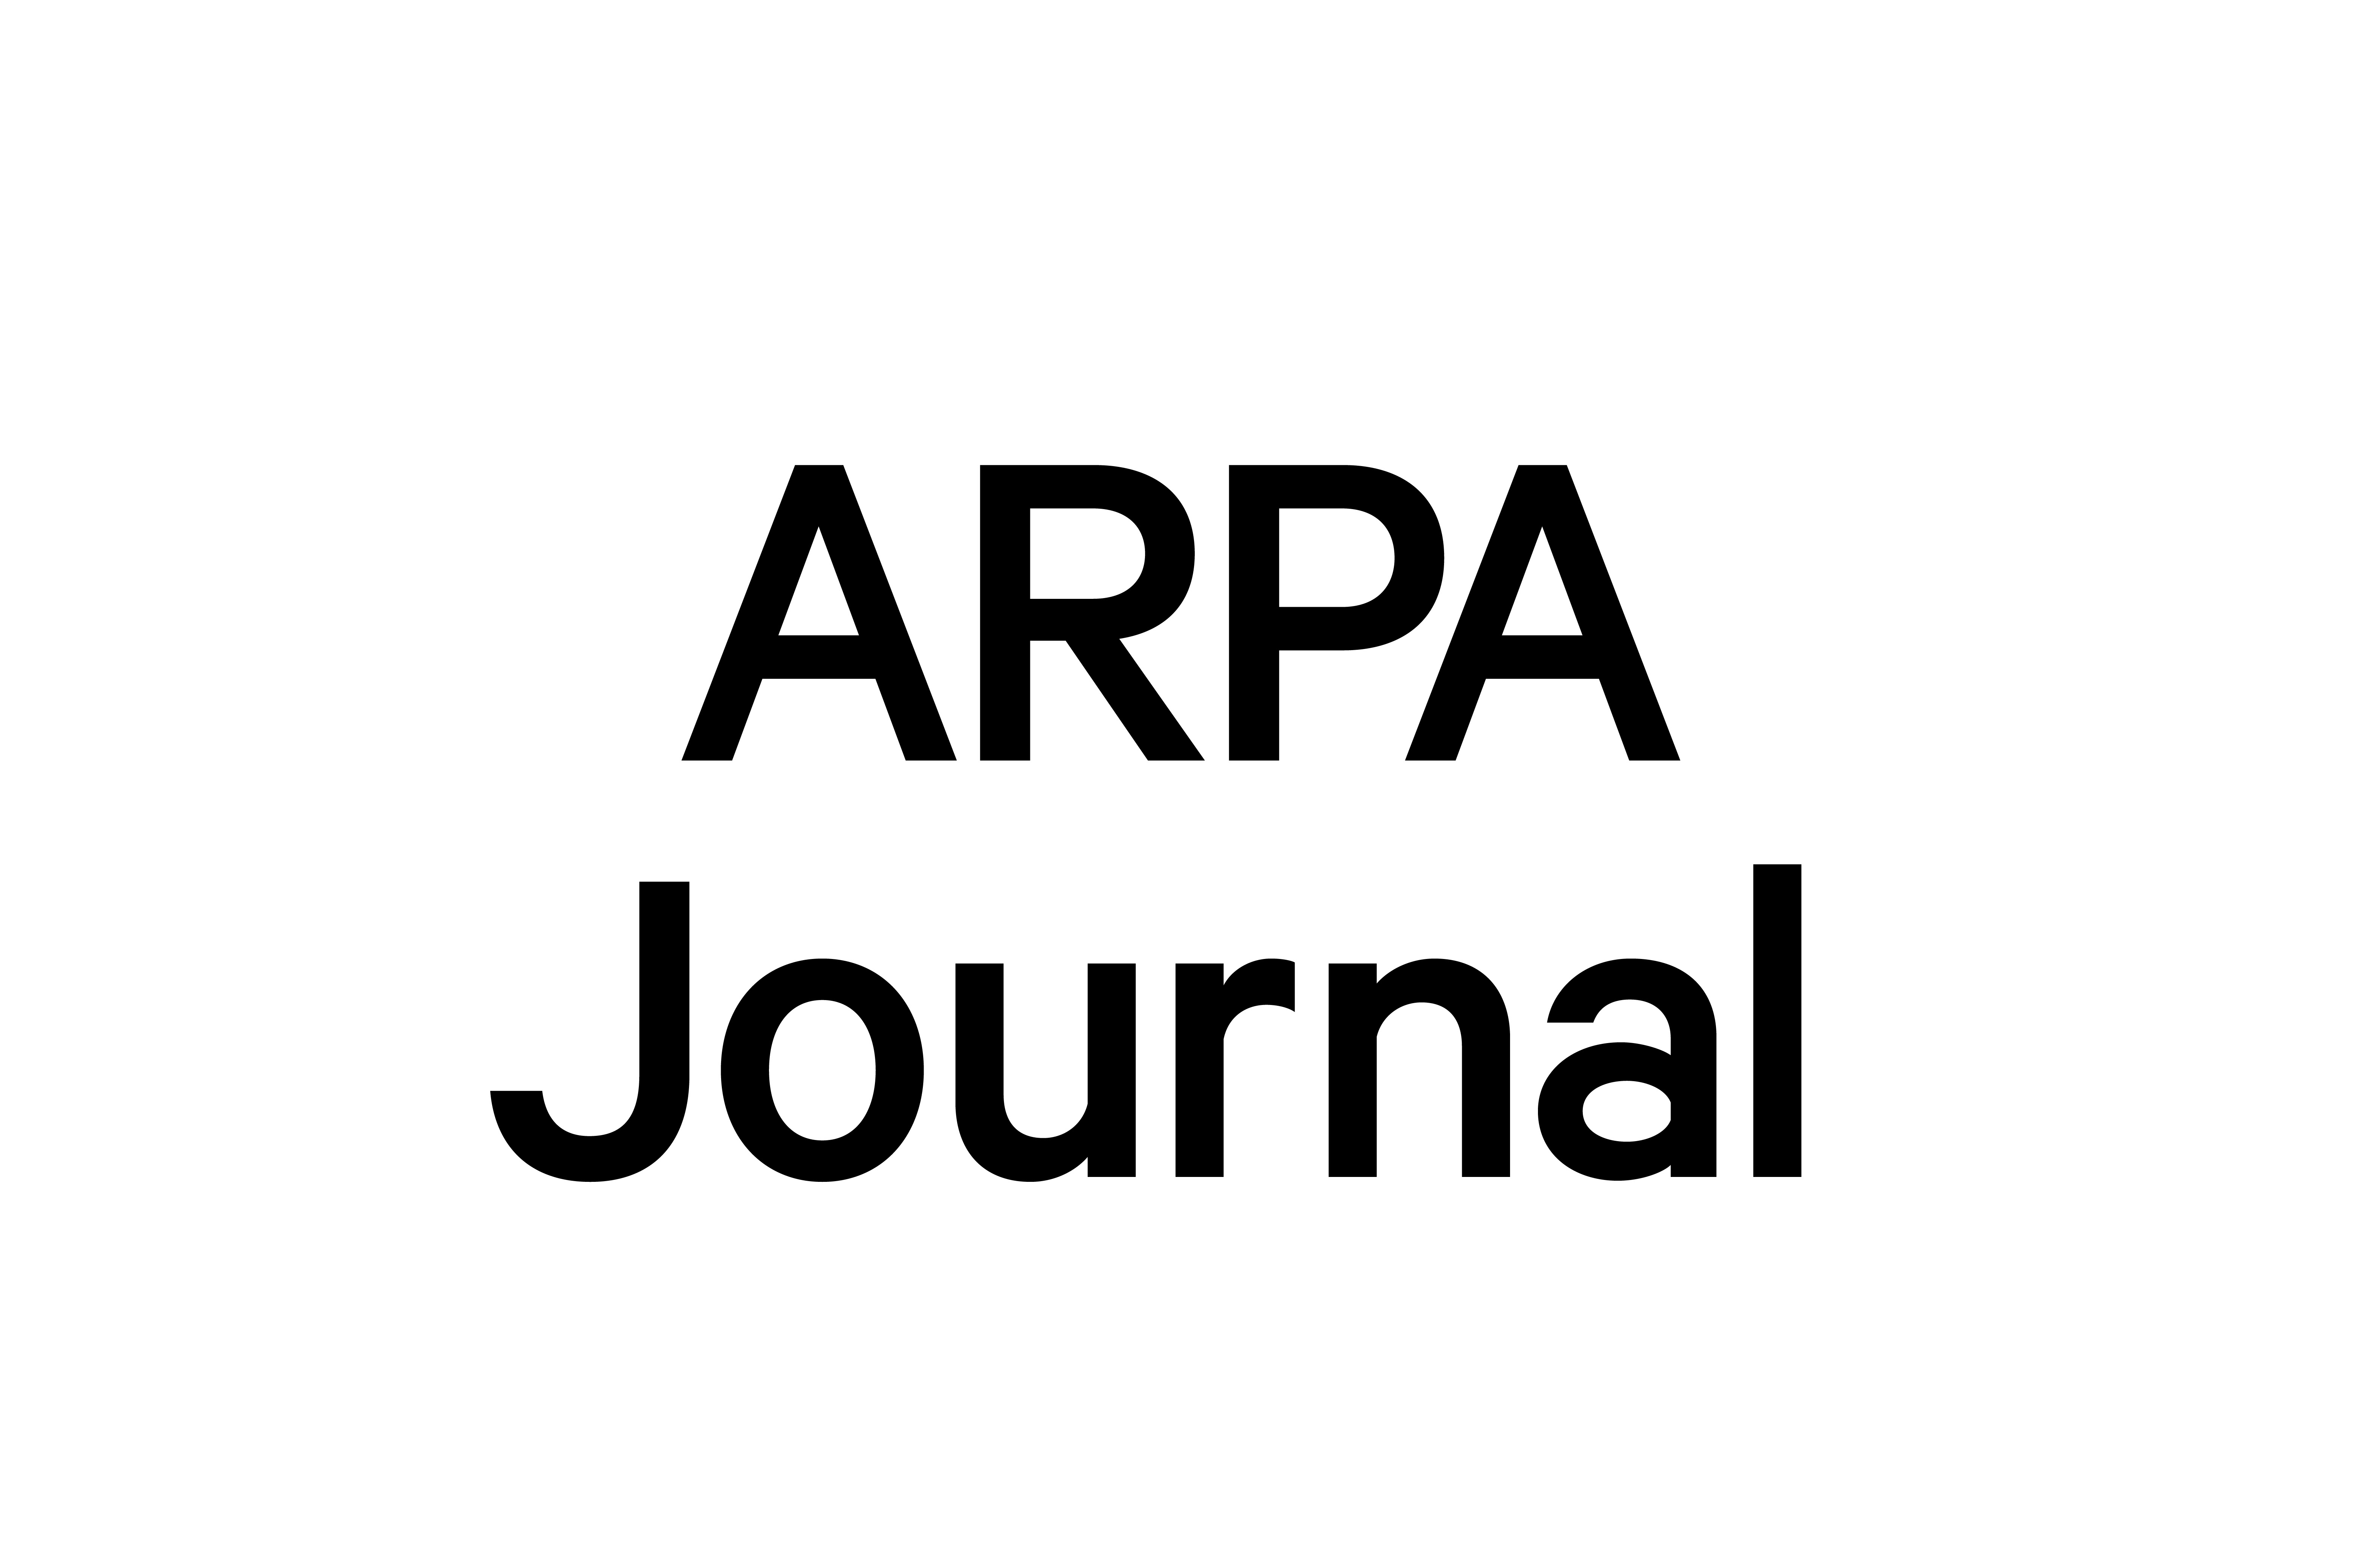 ARPA Journal - MTWTF